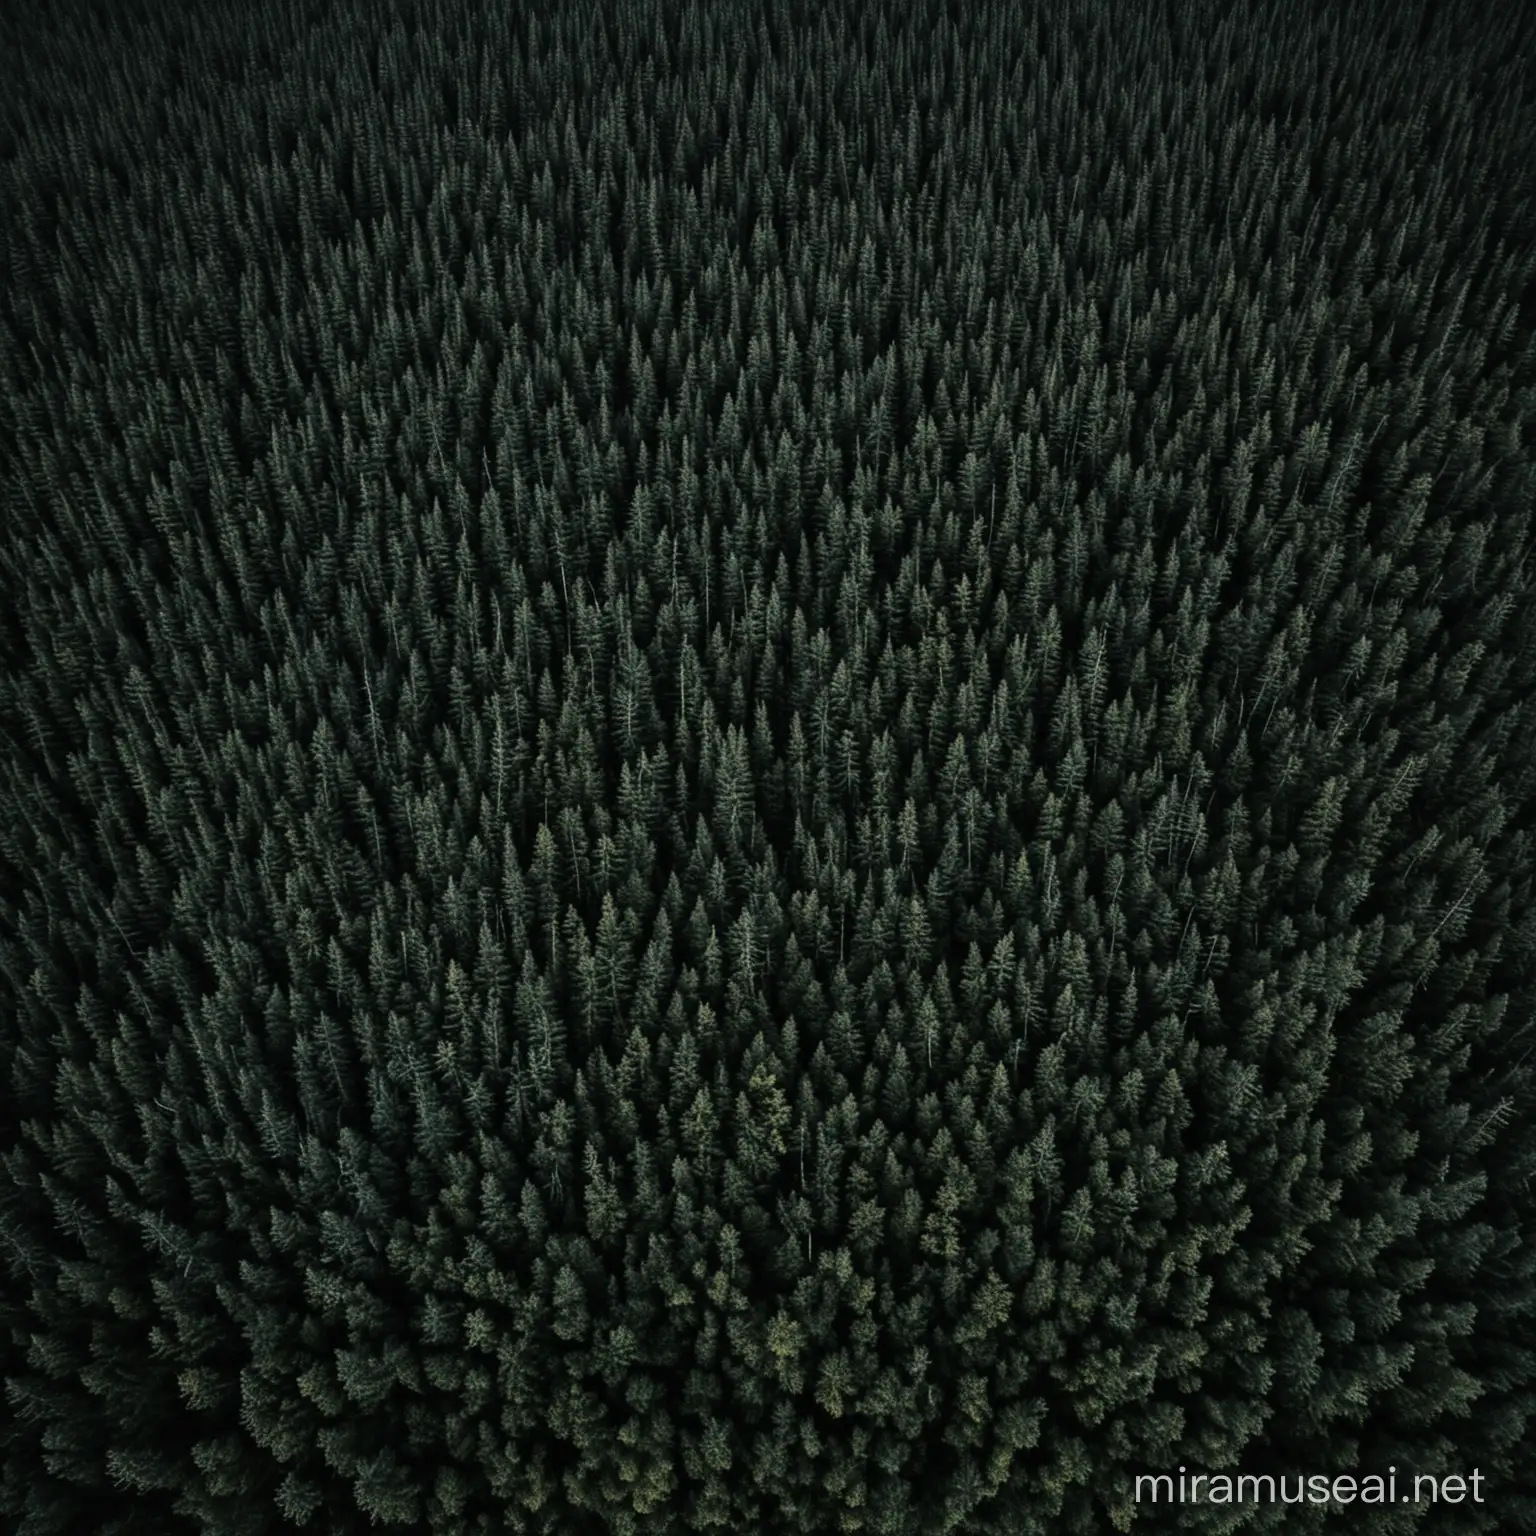 A dark forest in the Alaskan wilderness